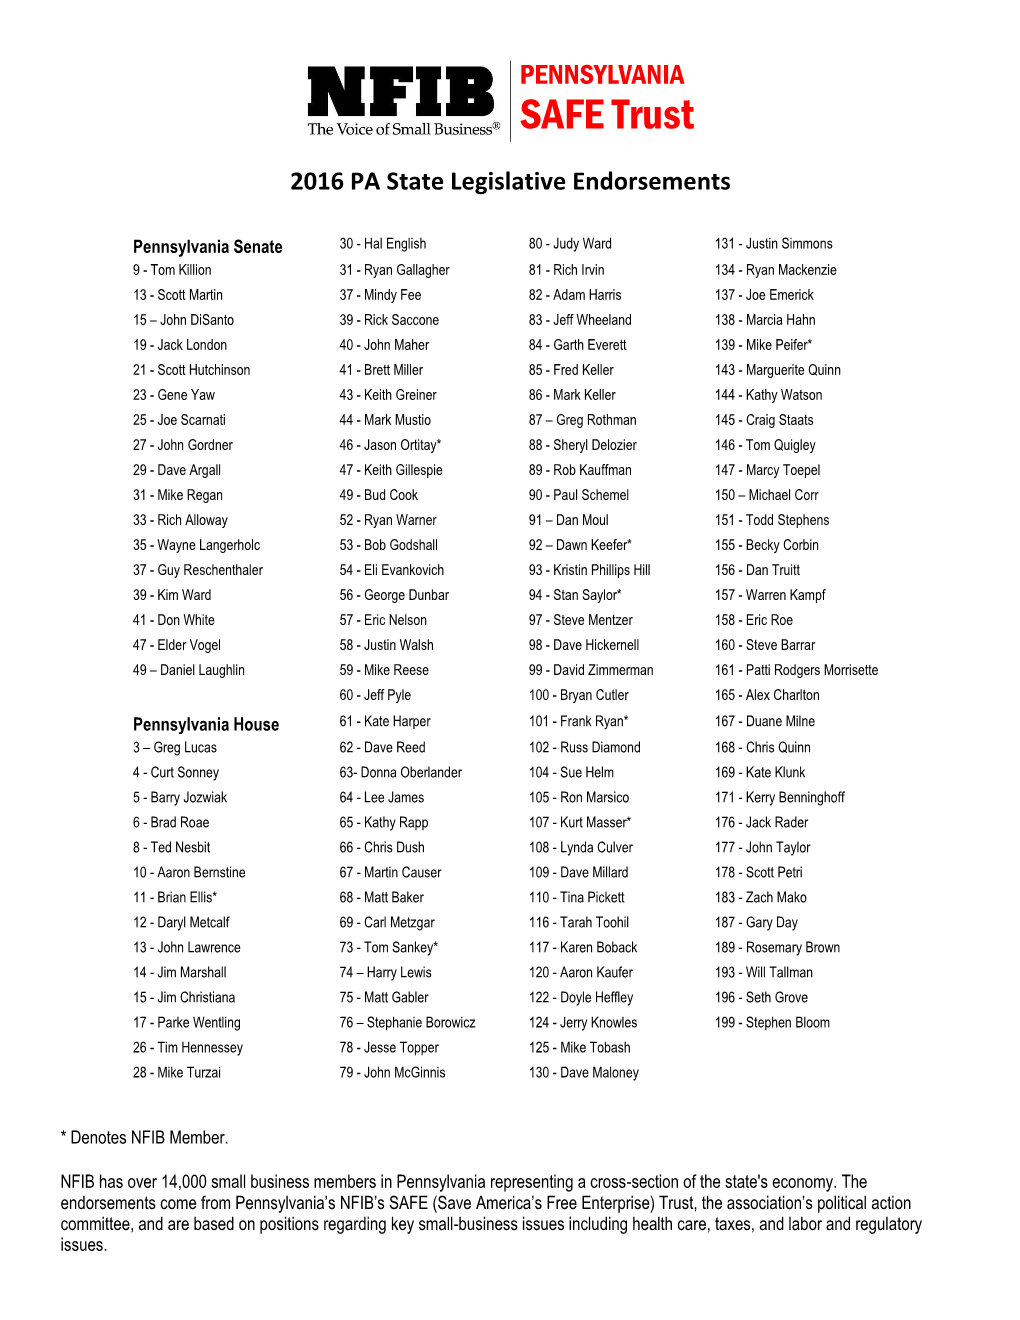 Link to Endorsed Pennsylvania Legislative Candidates By